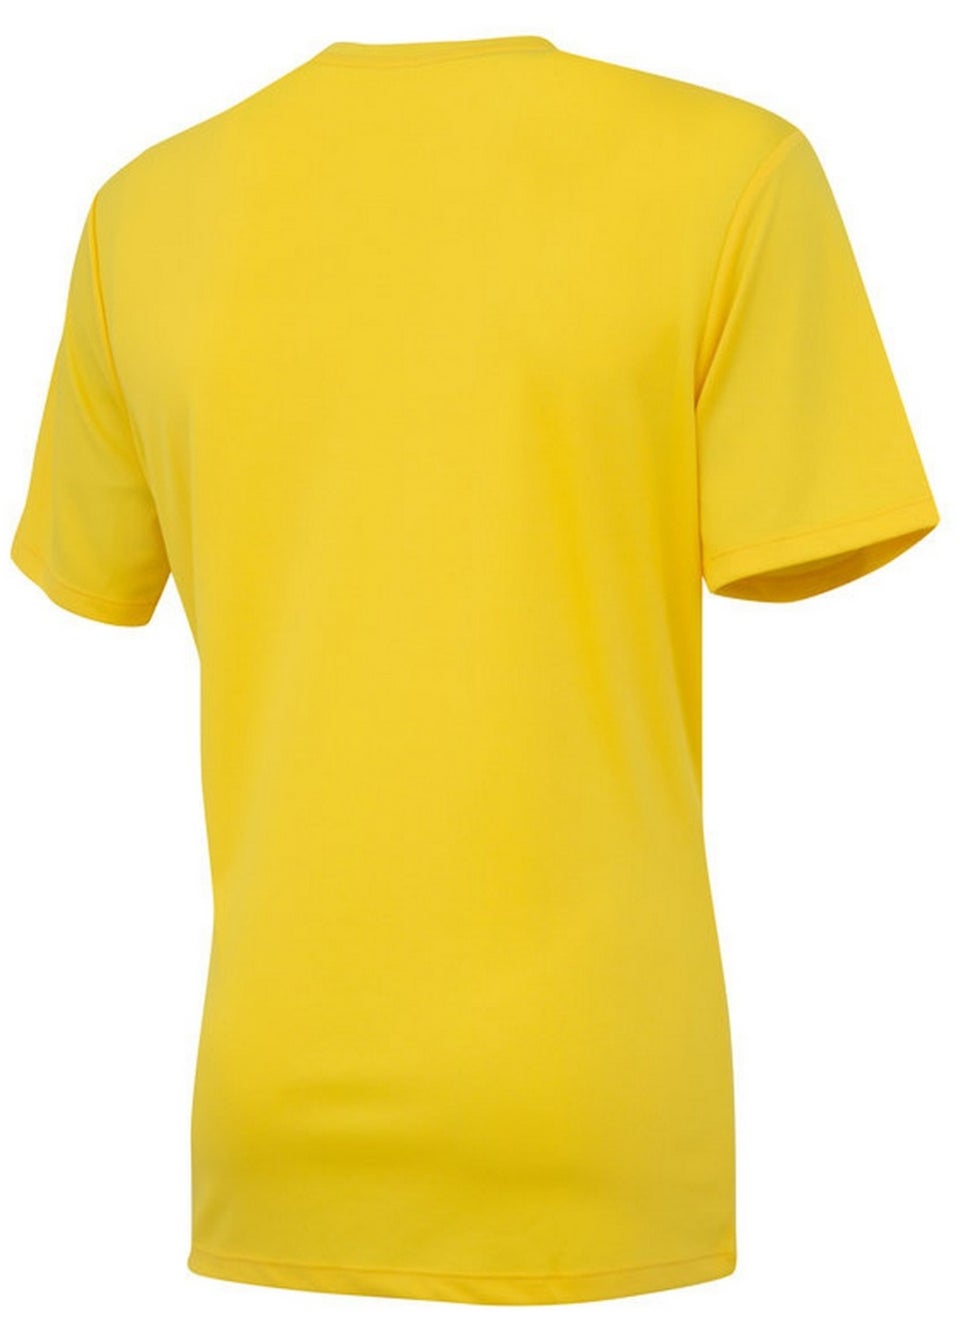 Umbro Yellow Club Short-Sleeved Jersey